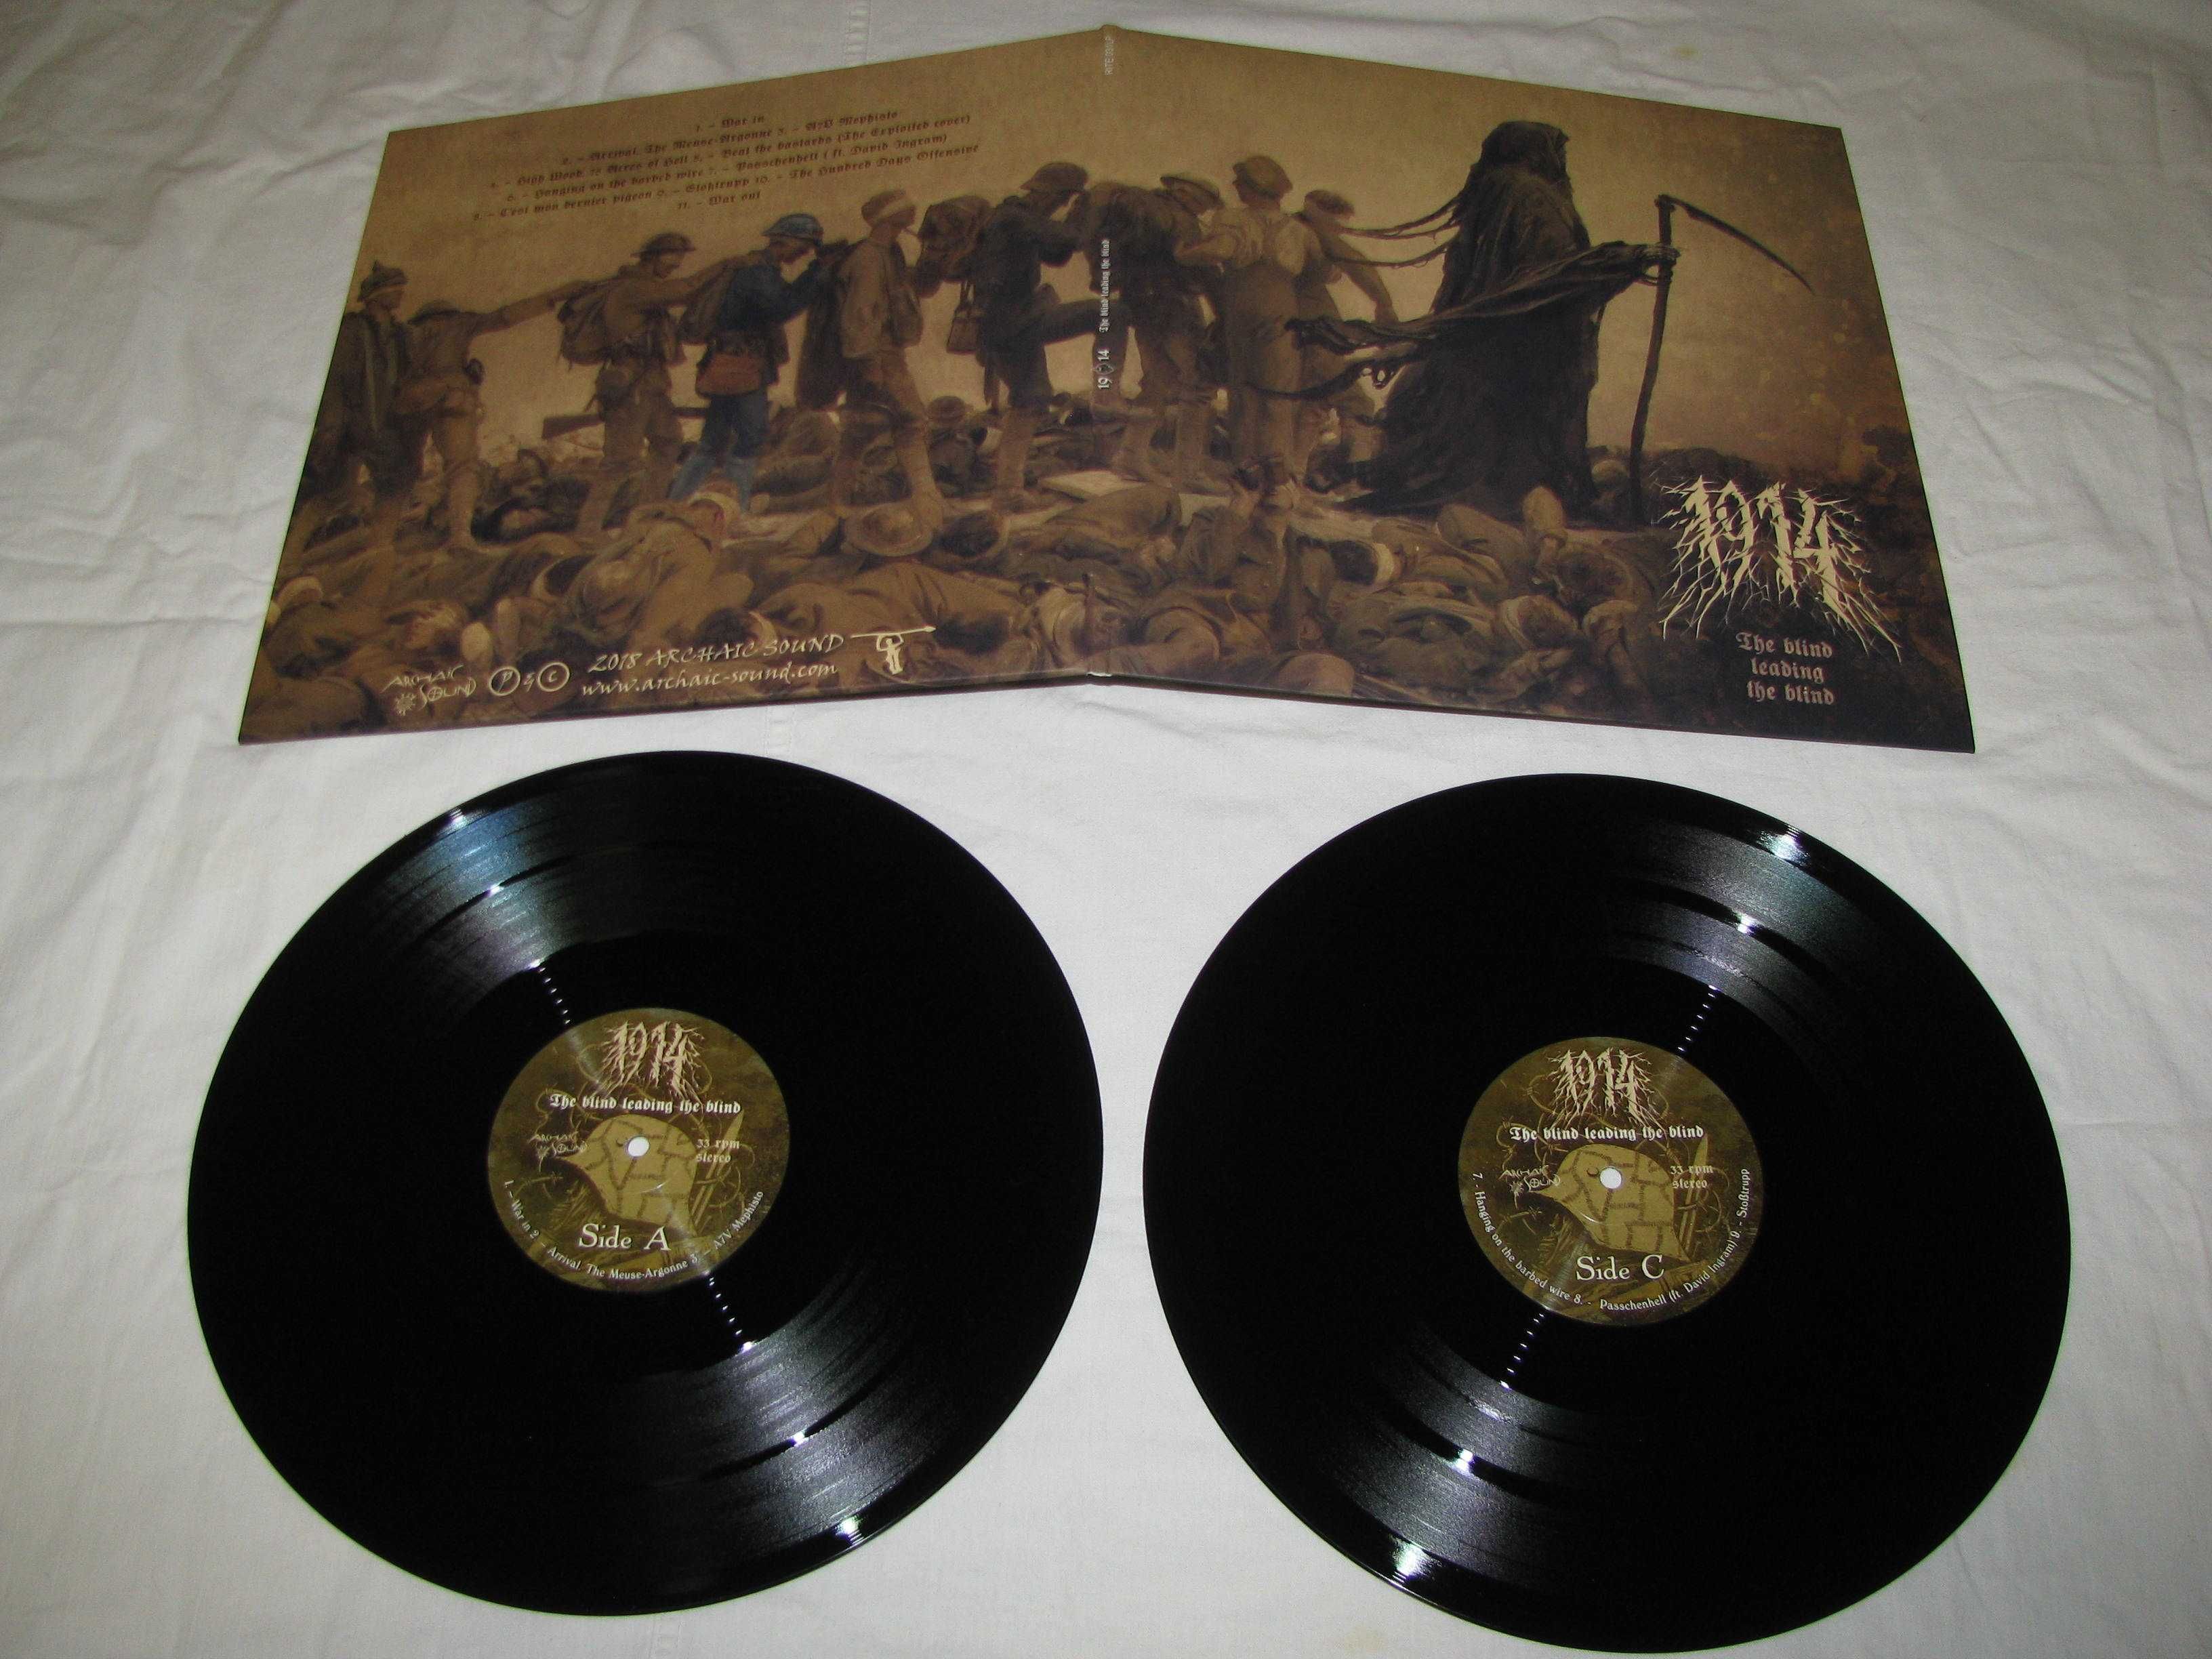 CD / LP Nokturnal Mortum, 1914  вініл, винил, пластинки